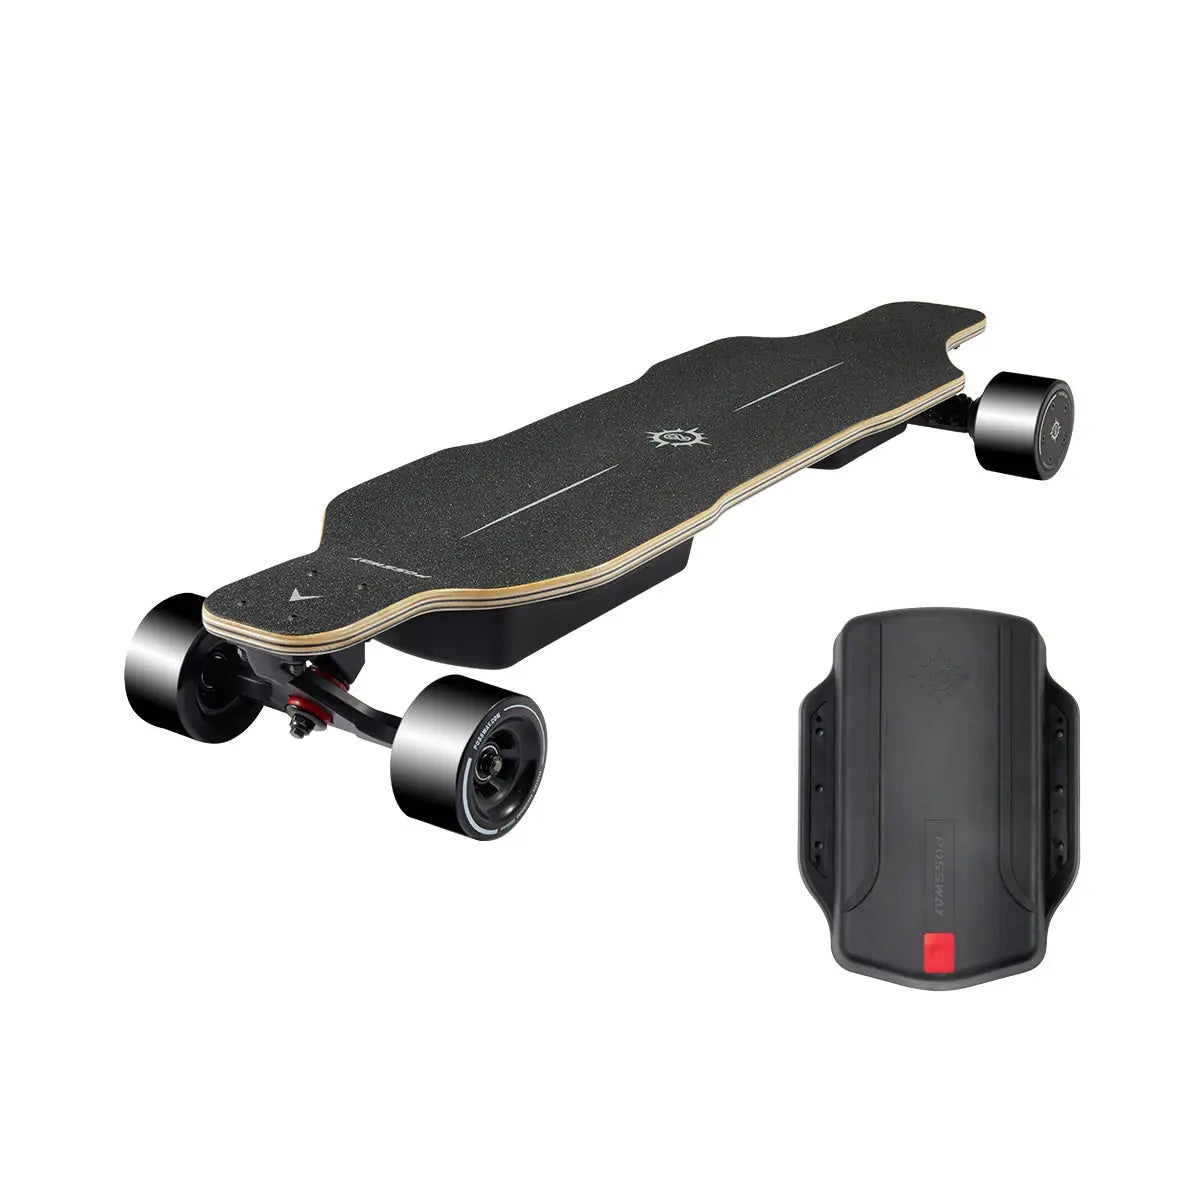 Possway T2 Electric Skateboard ( 2022 version ) possway 559.00